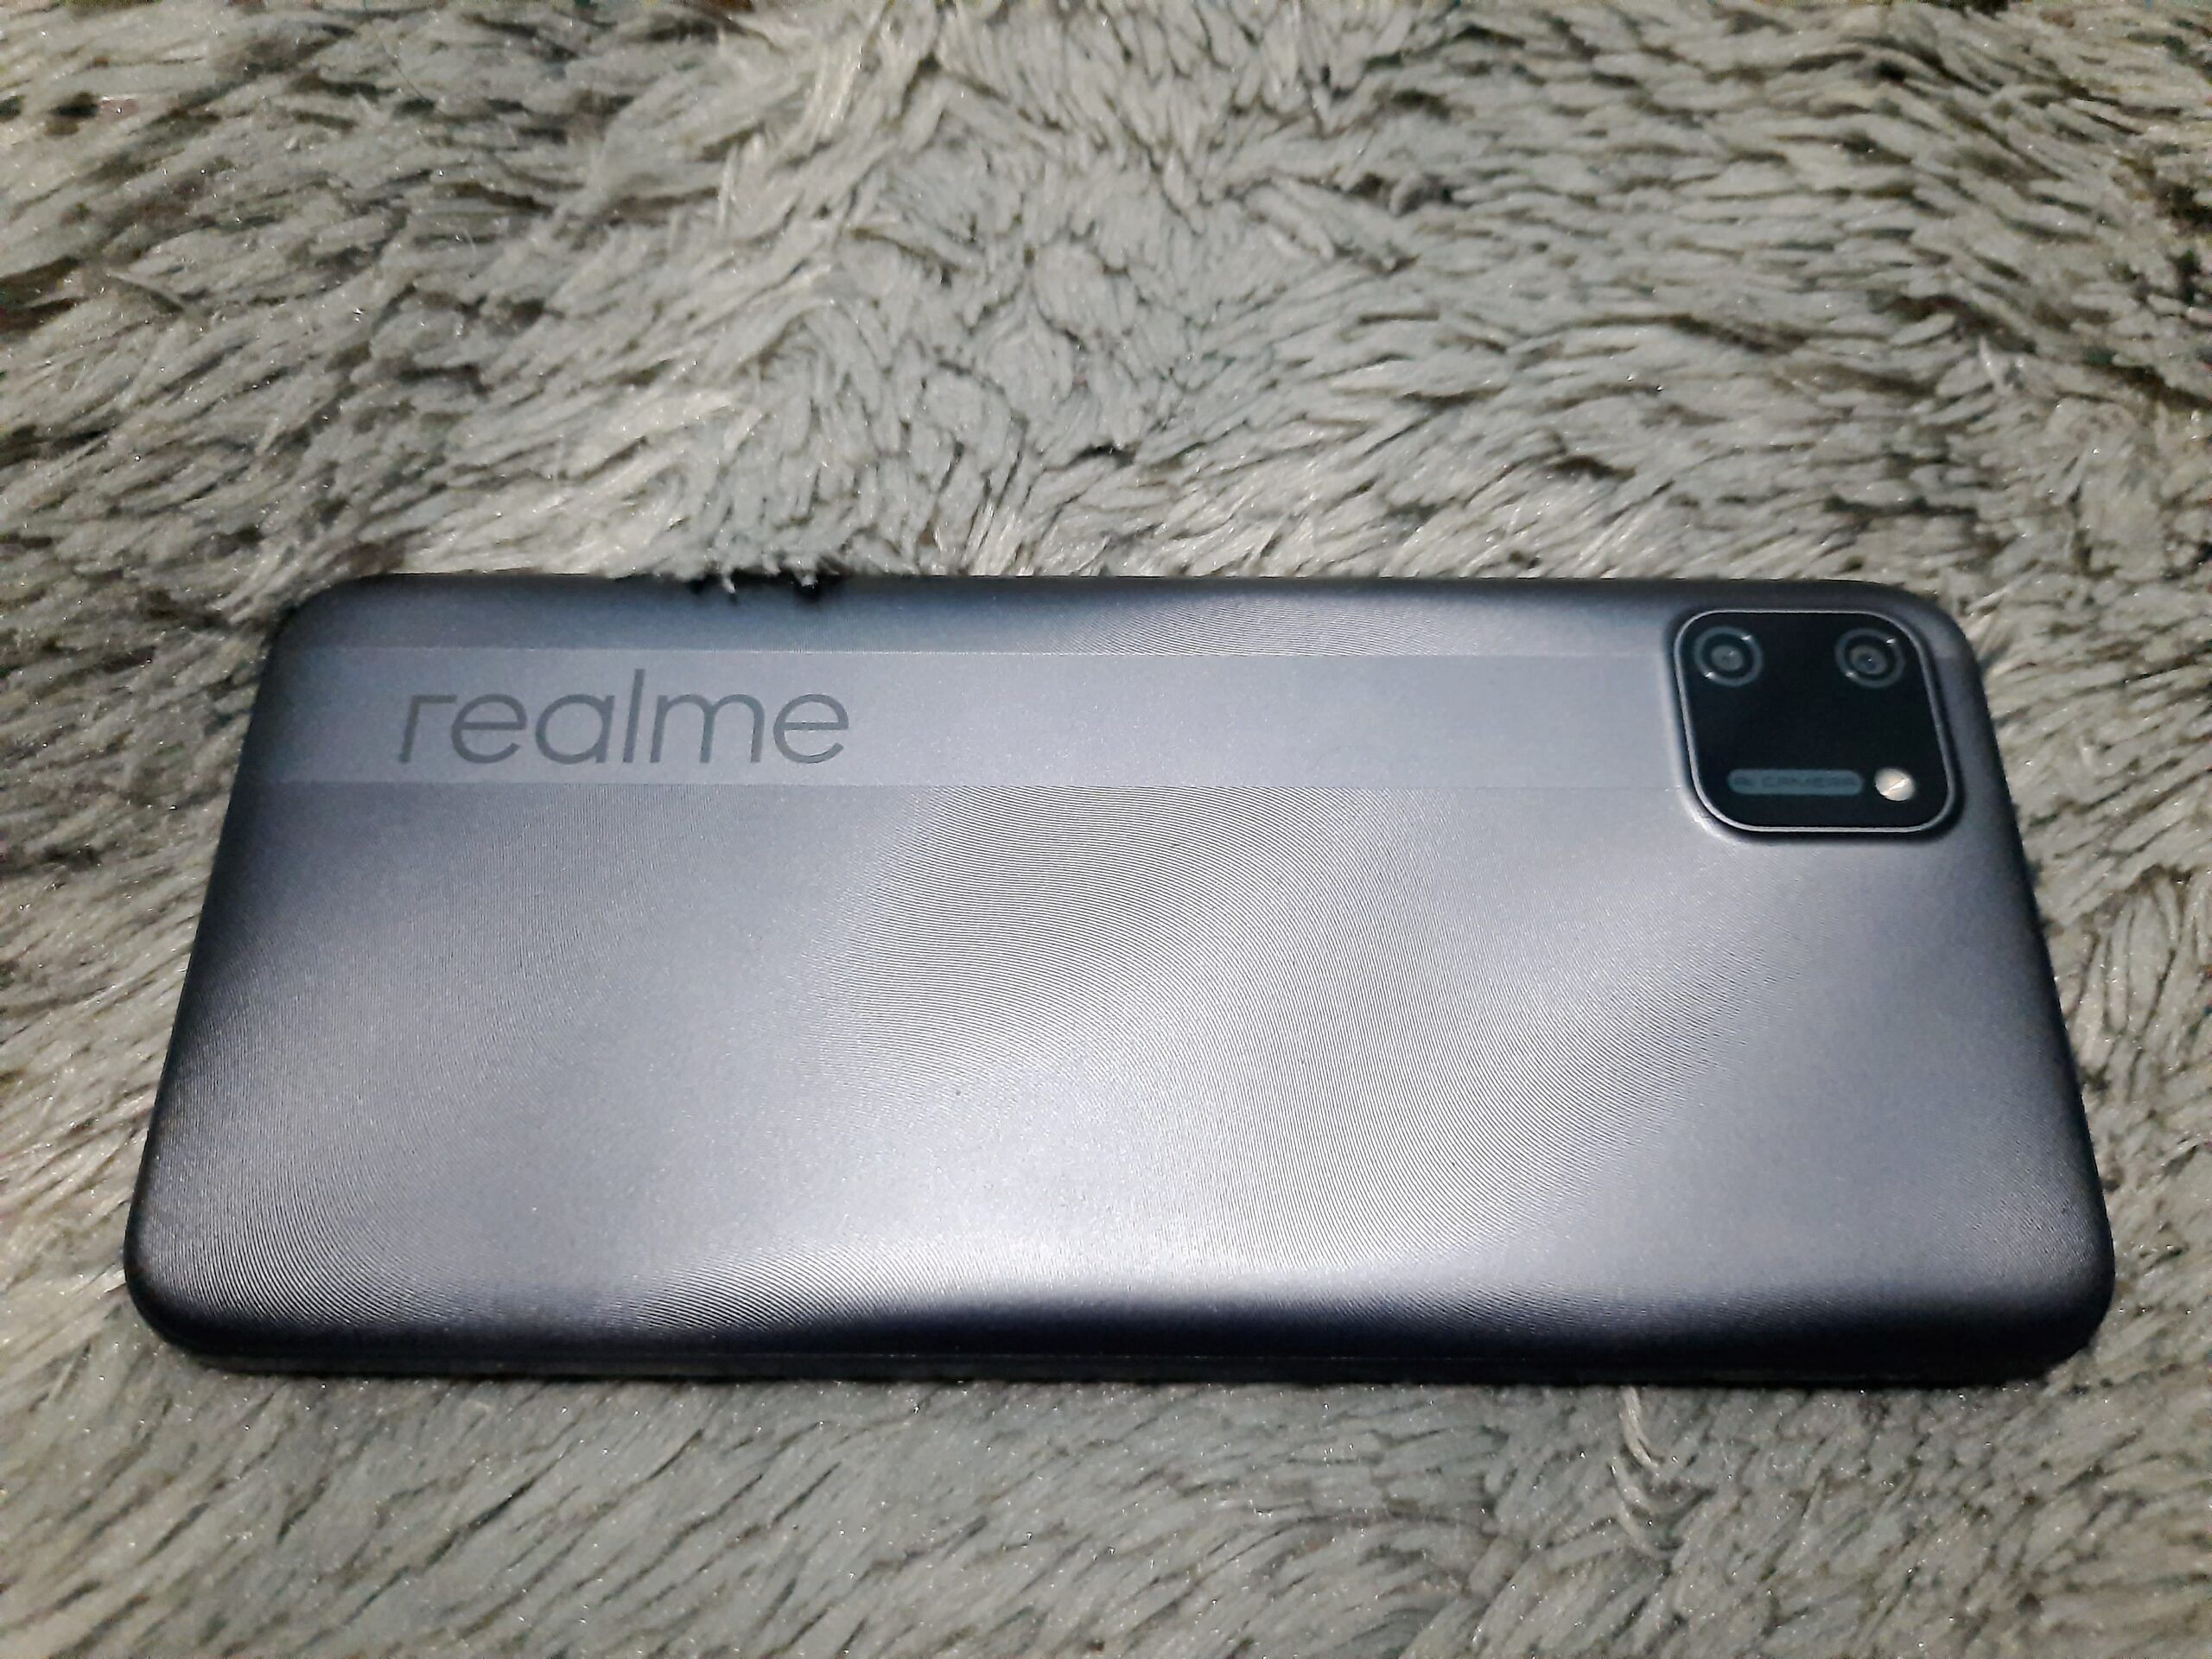 review realme c11 - Techdaily